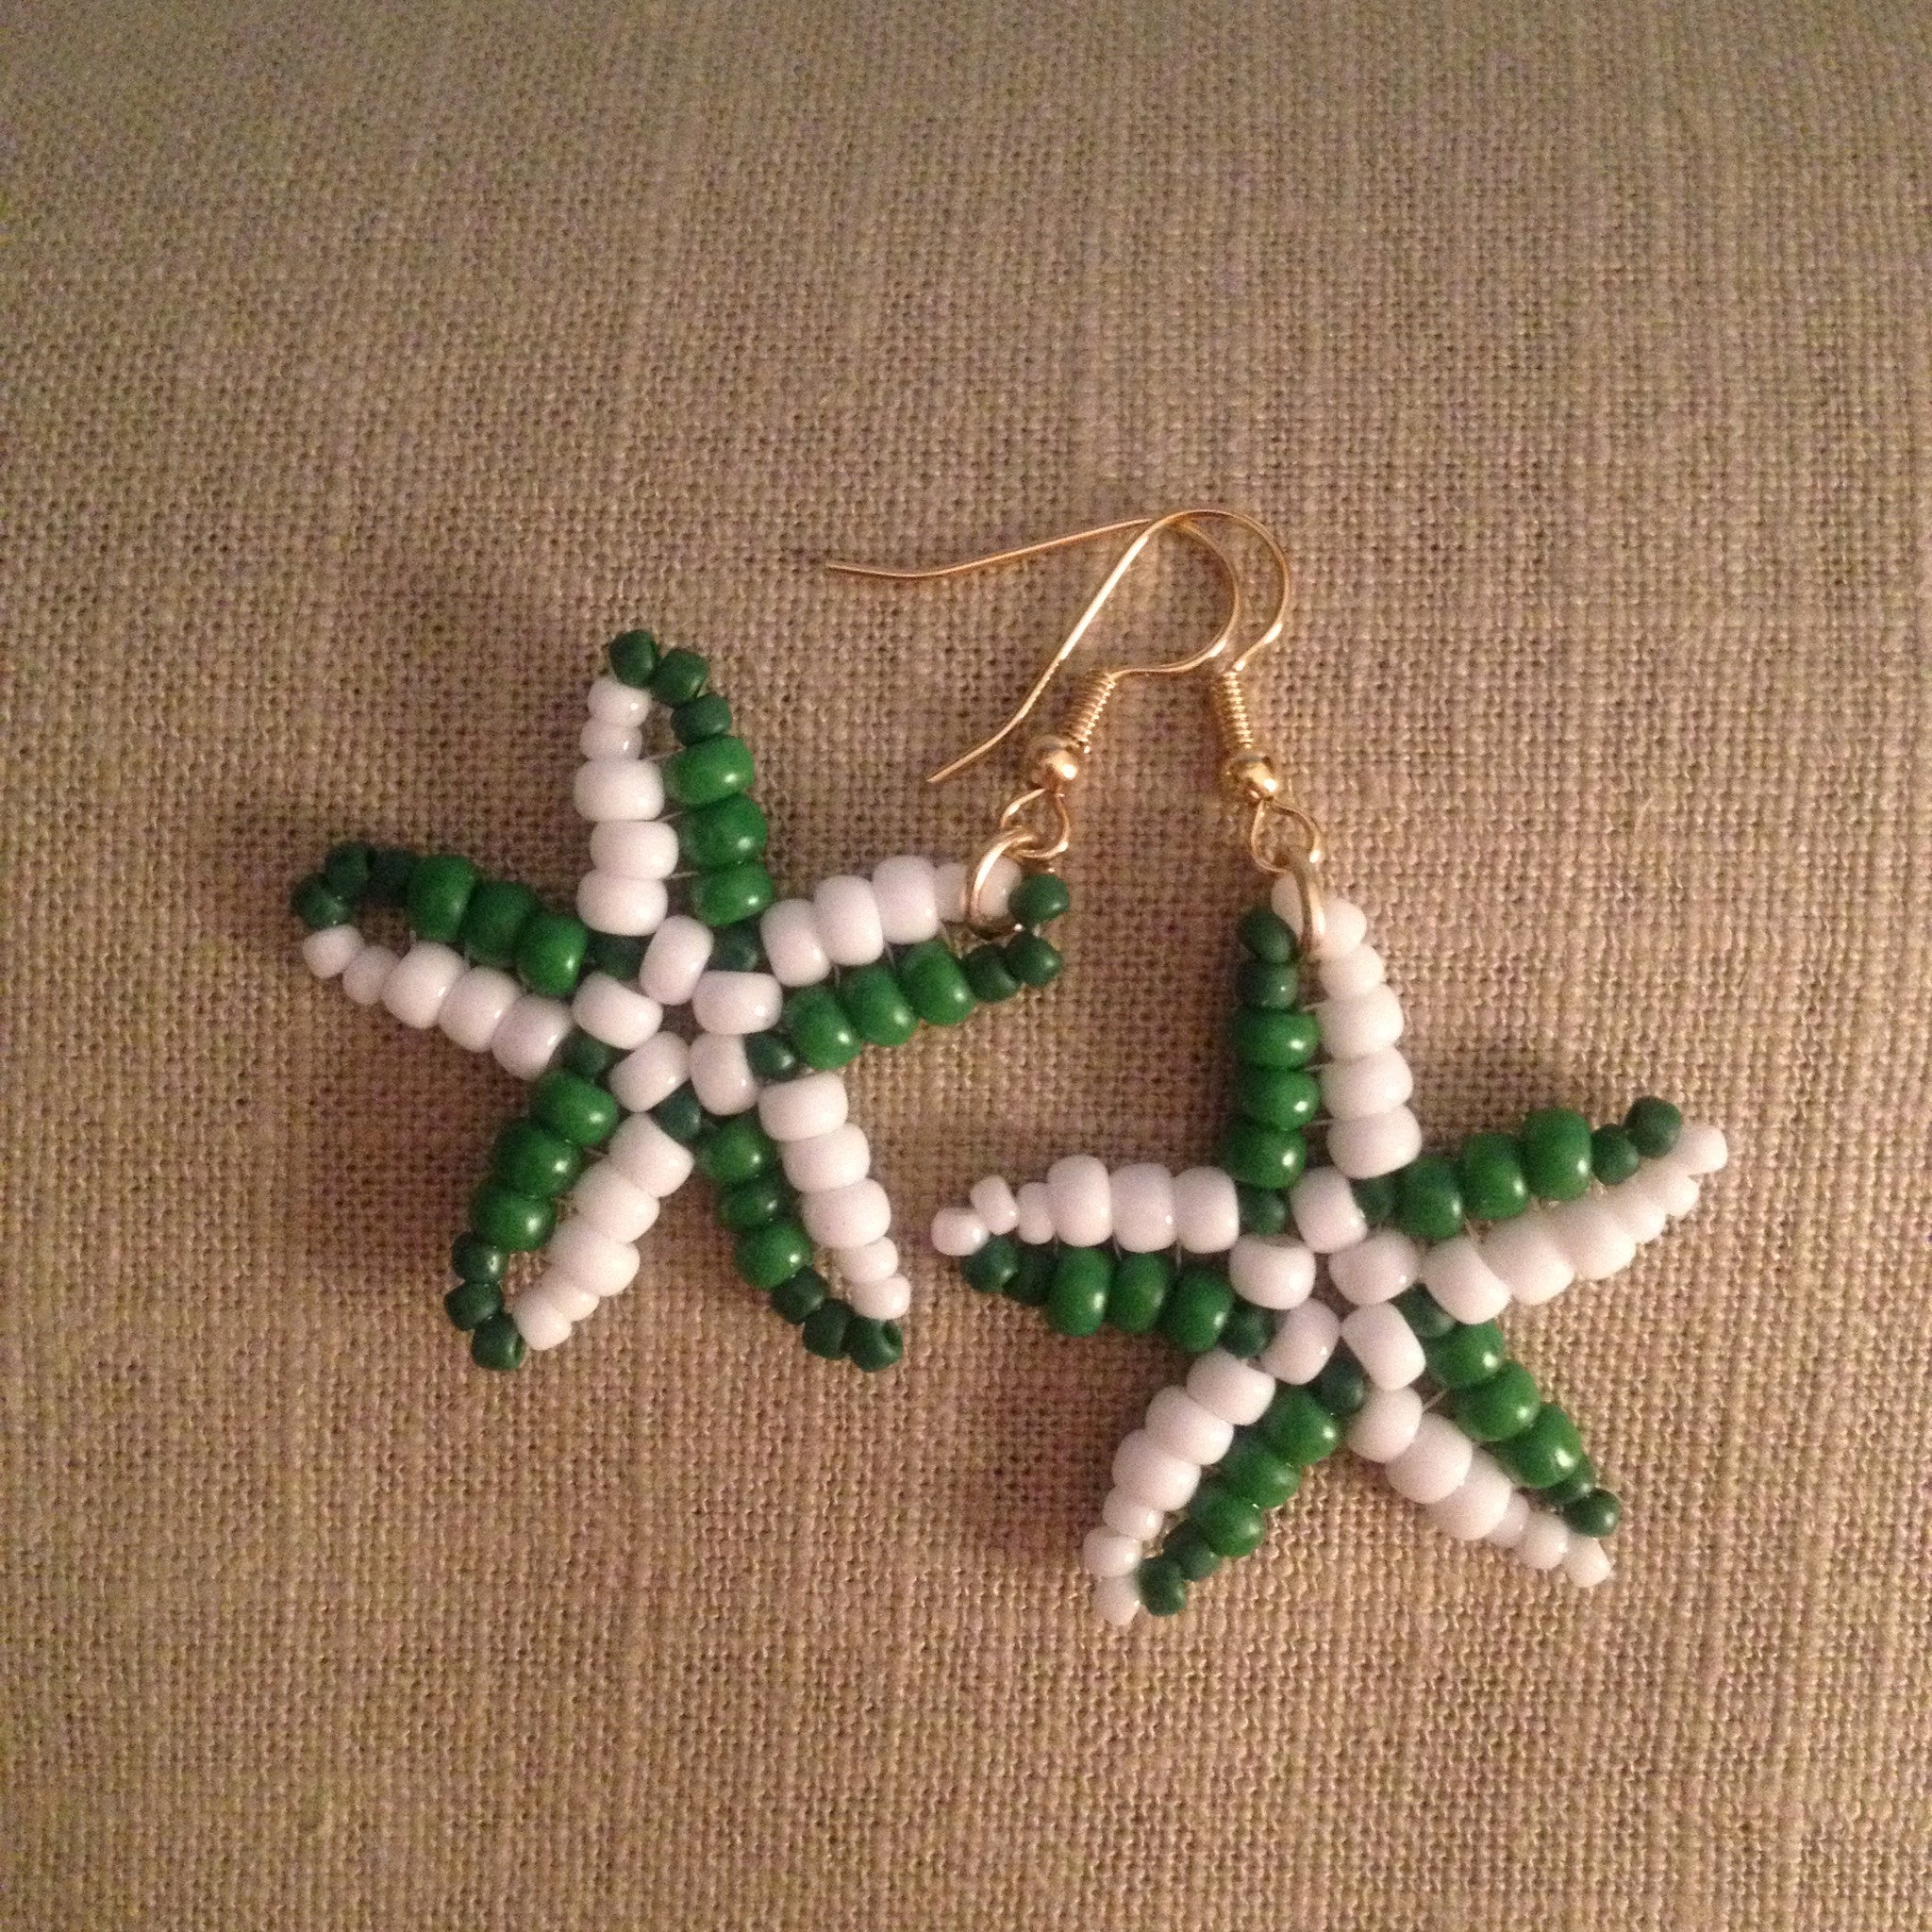 Starfish beaded hand made earrings kelly green white resort cruise wear beachy fun